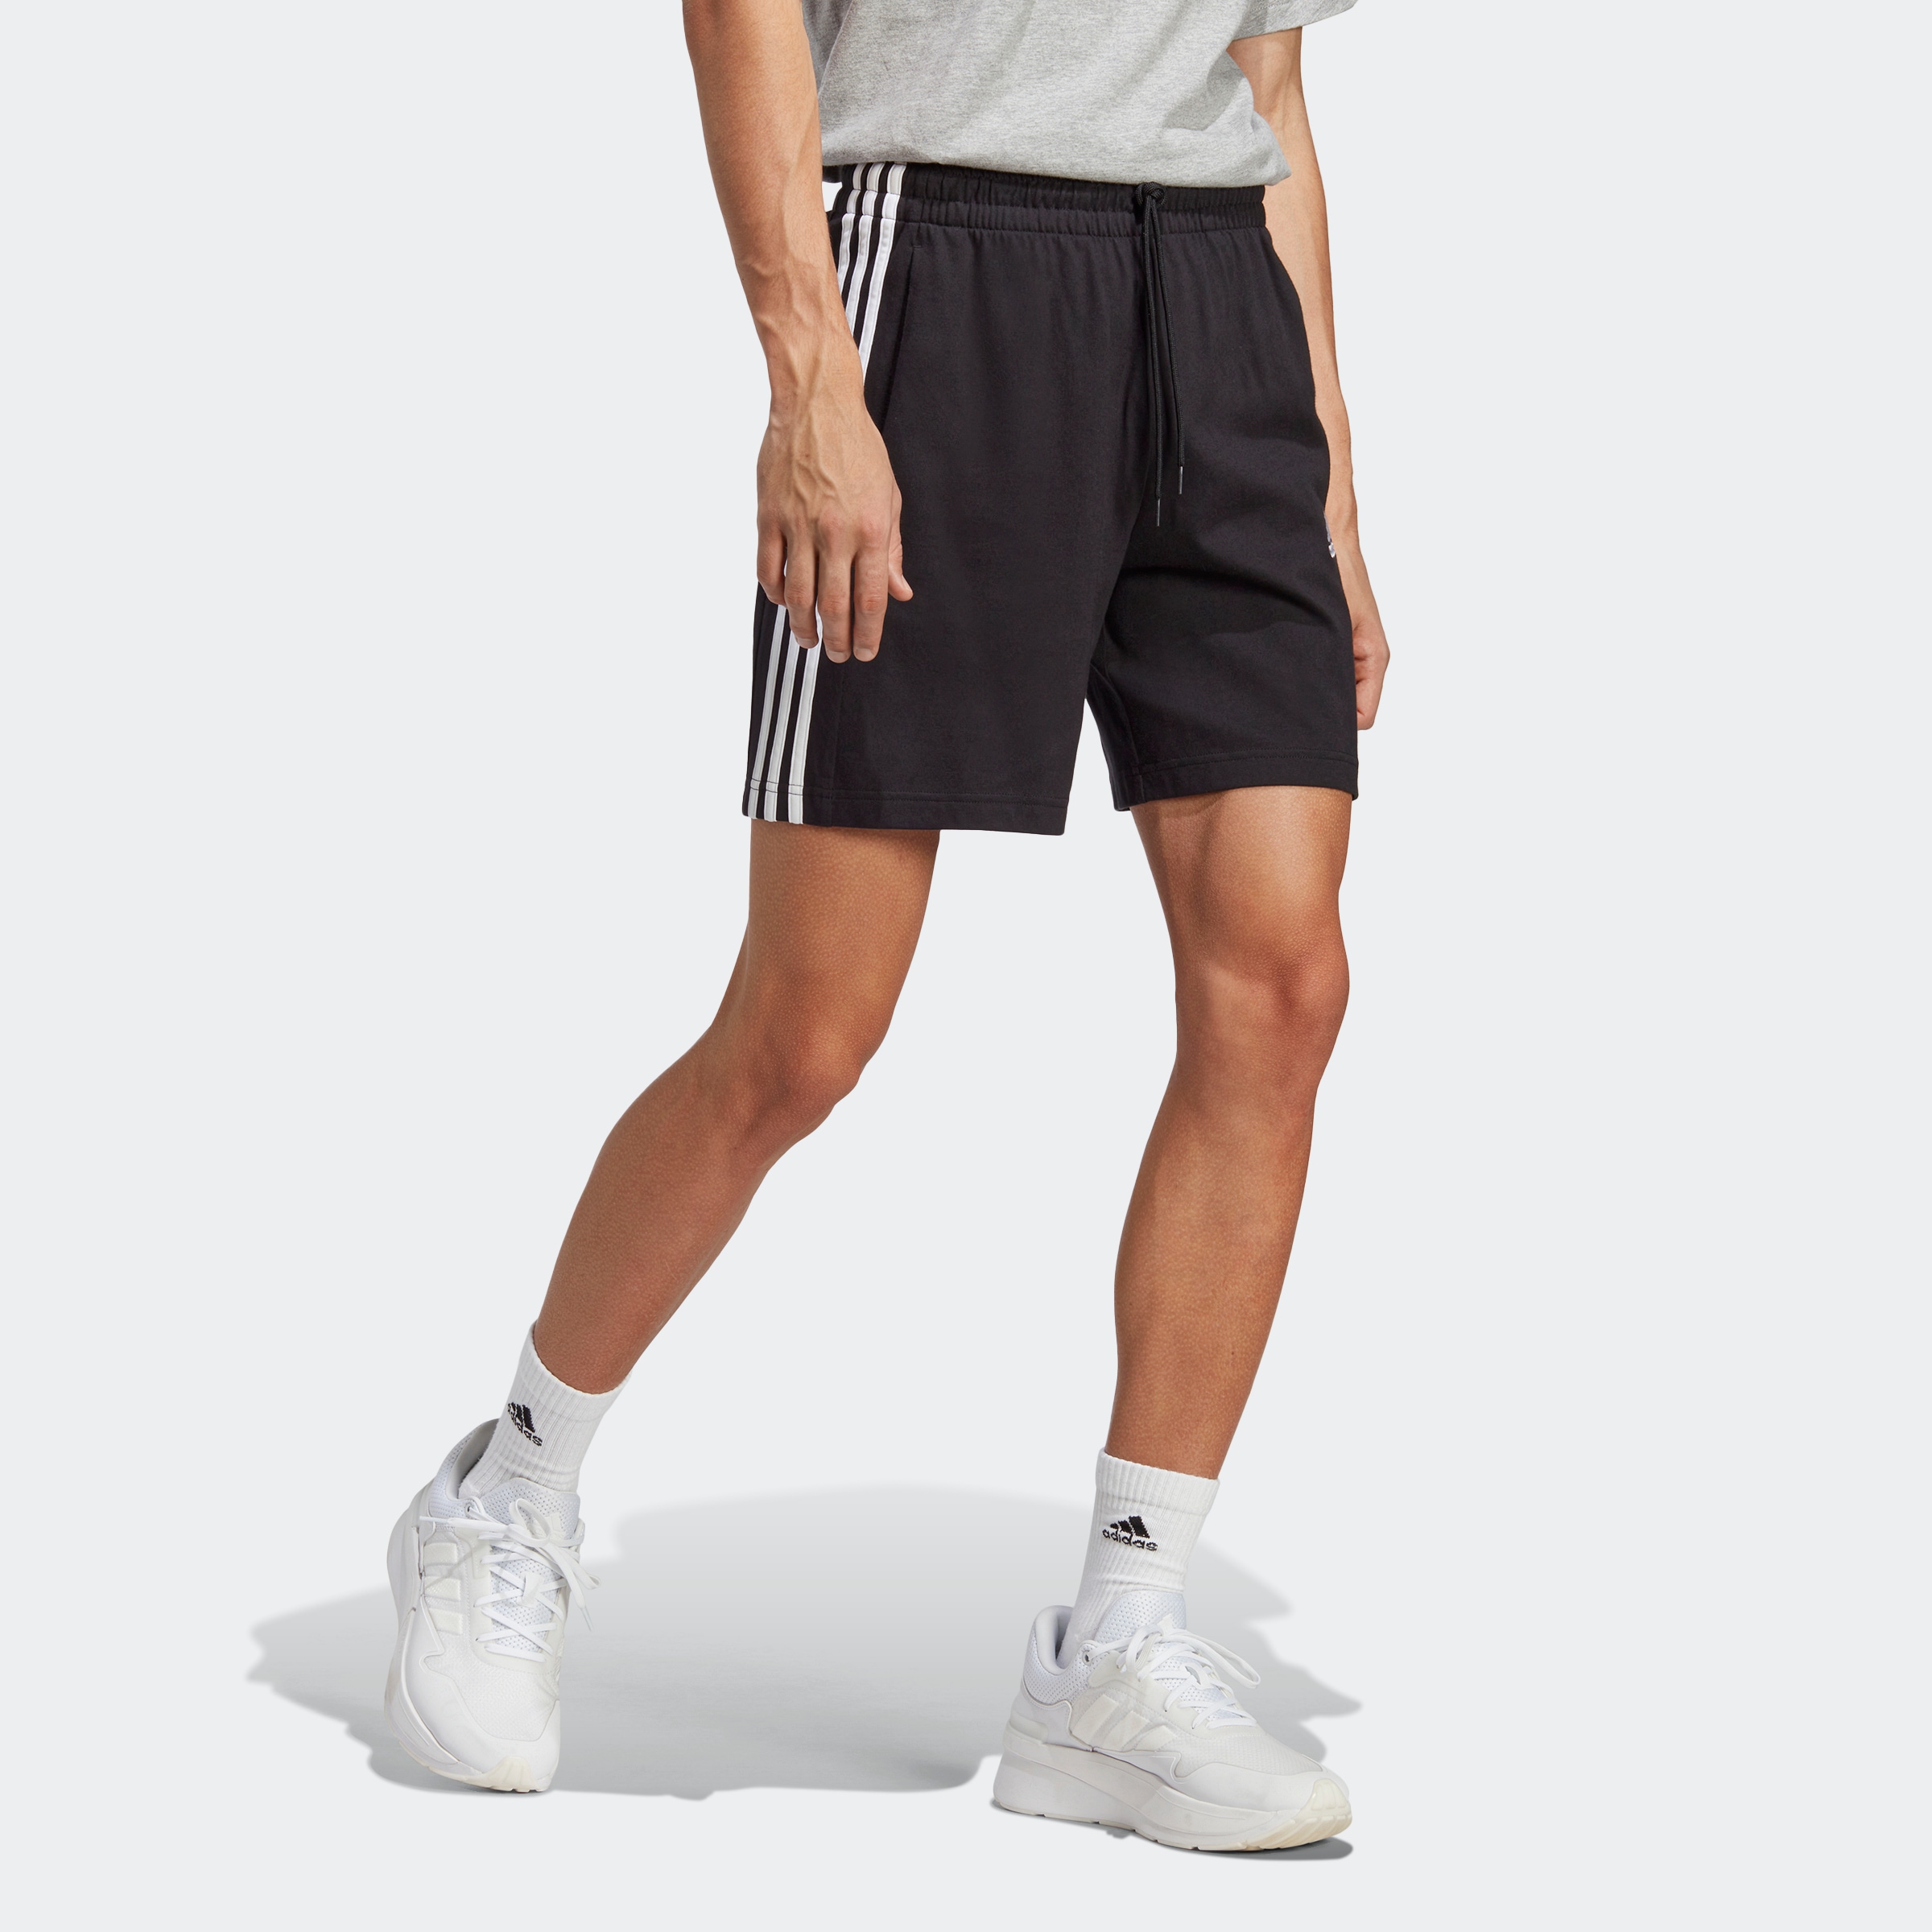 SHO«, OTTO online bei tlg.) Shorts adidas 3S kaufen SJ 7 (1 »M Sportswear